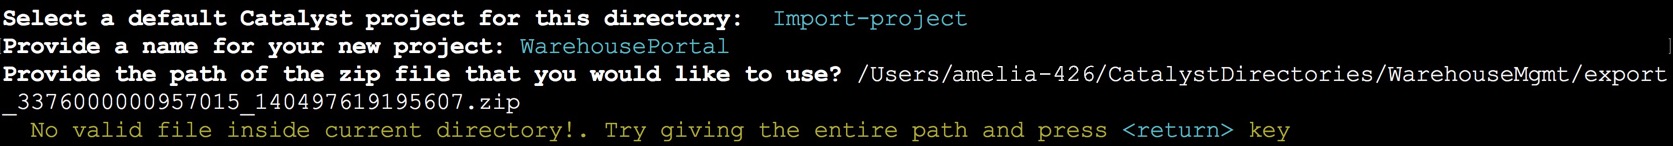 Import Project in CLI